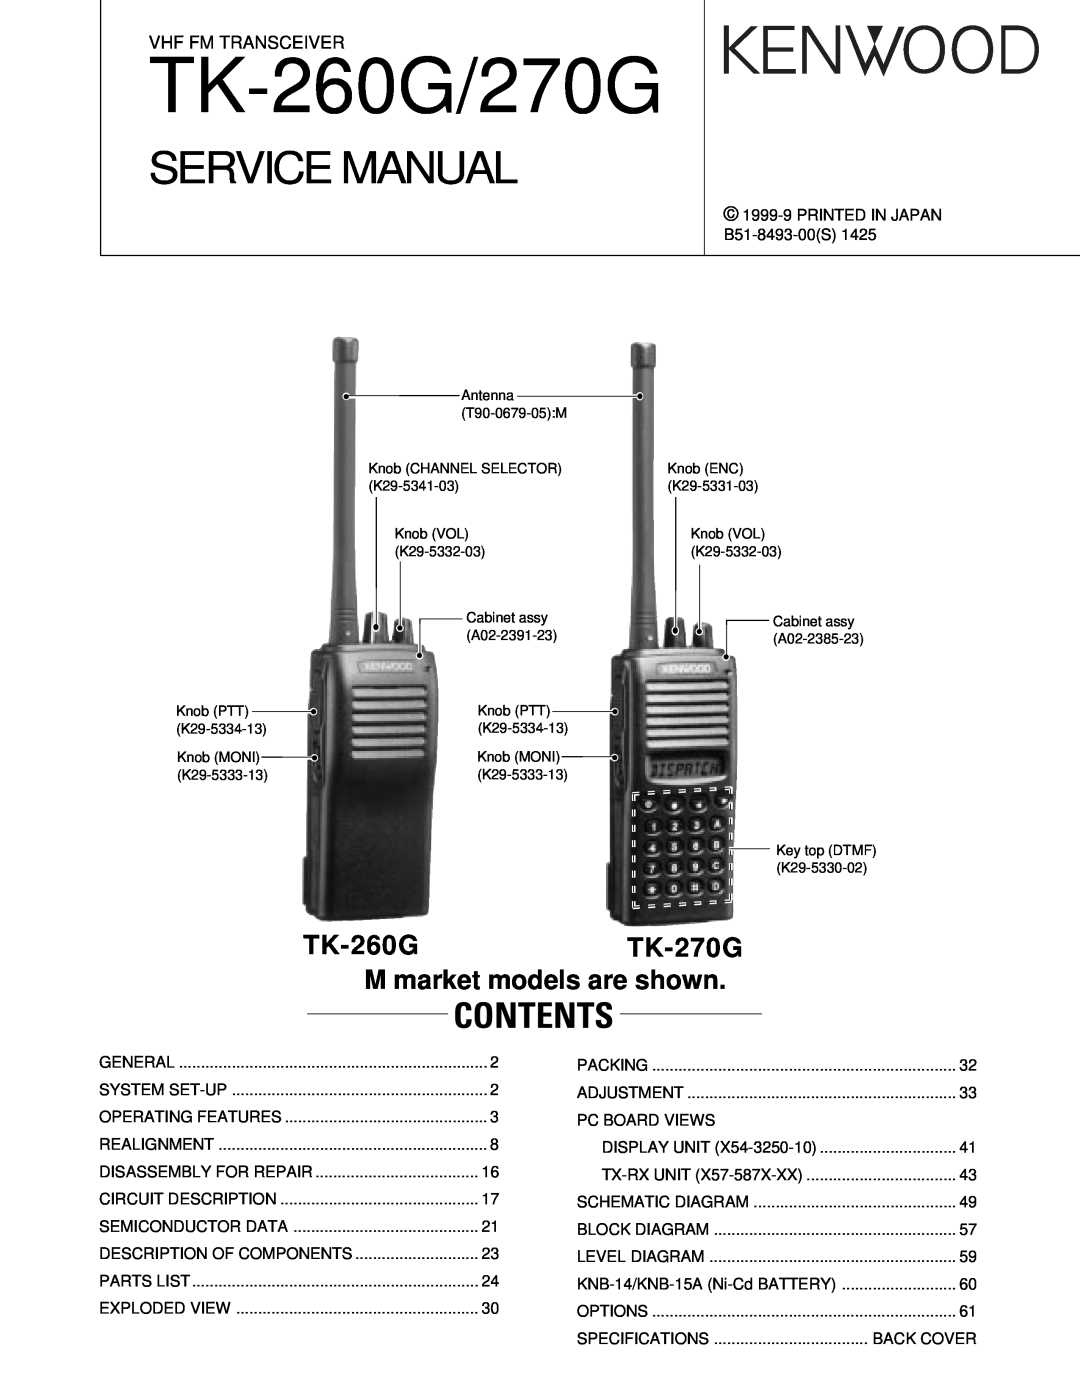 Kenwood service manual Contents, TK-260G/270G, Service Manual, TK-260GTK-270G M market models are shown 